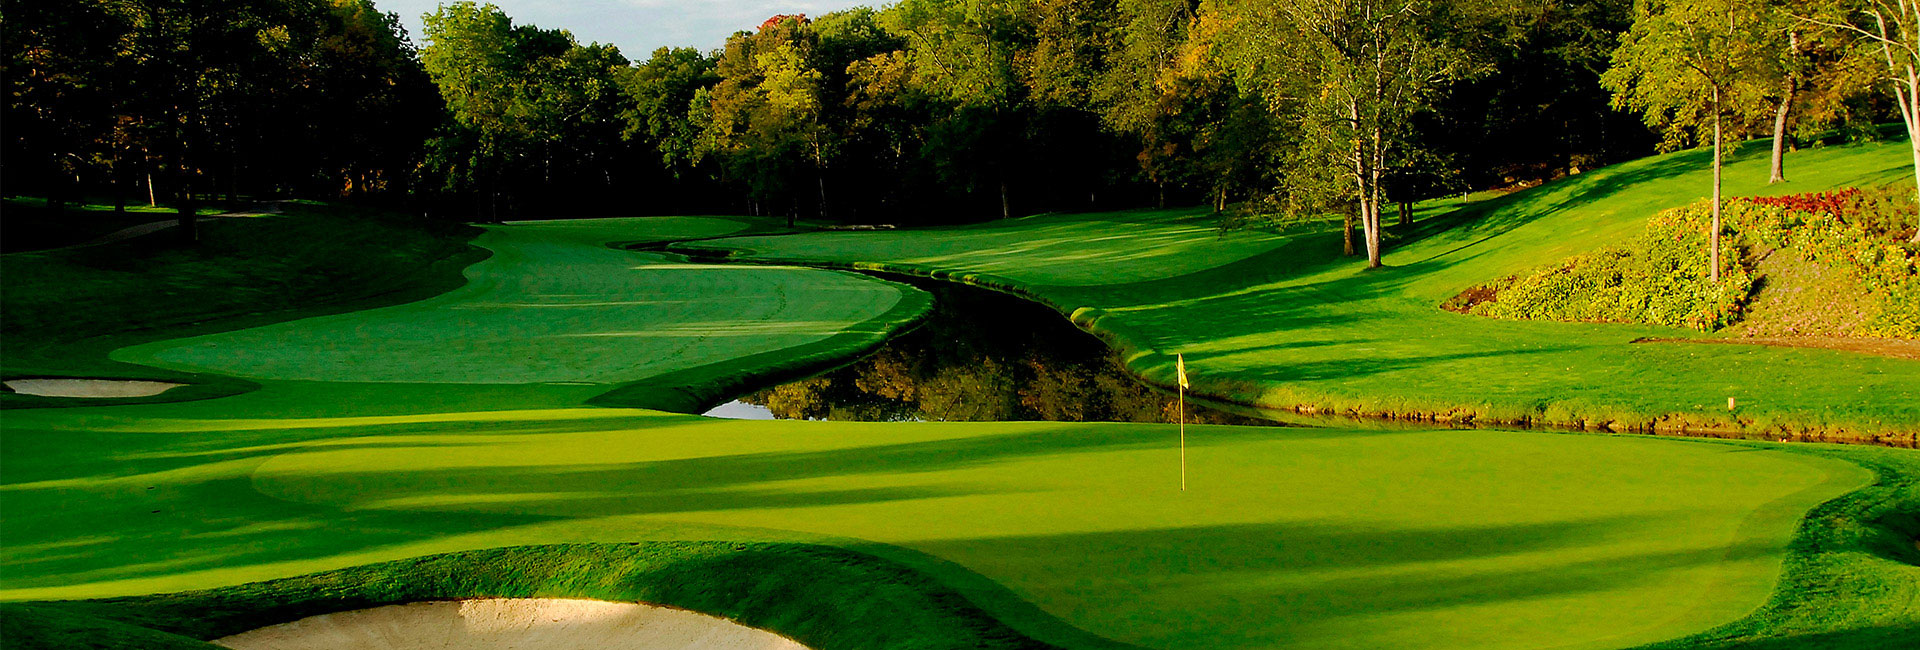 American Lake Veterans Golf Course - Nicklaus Design